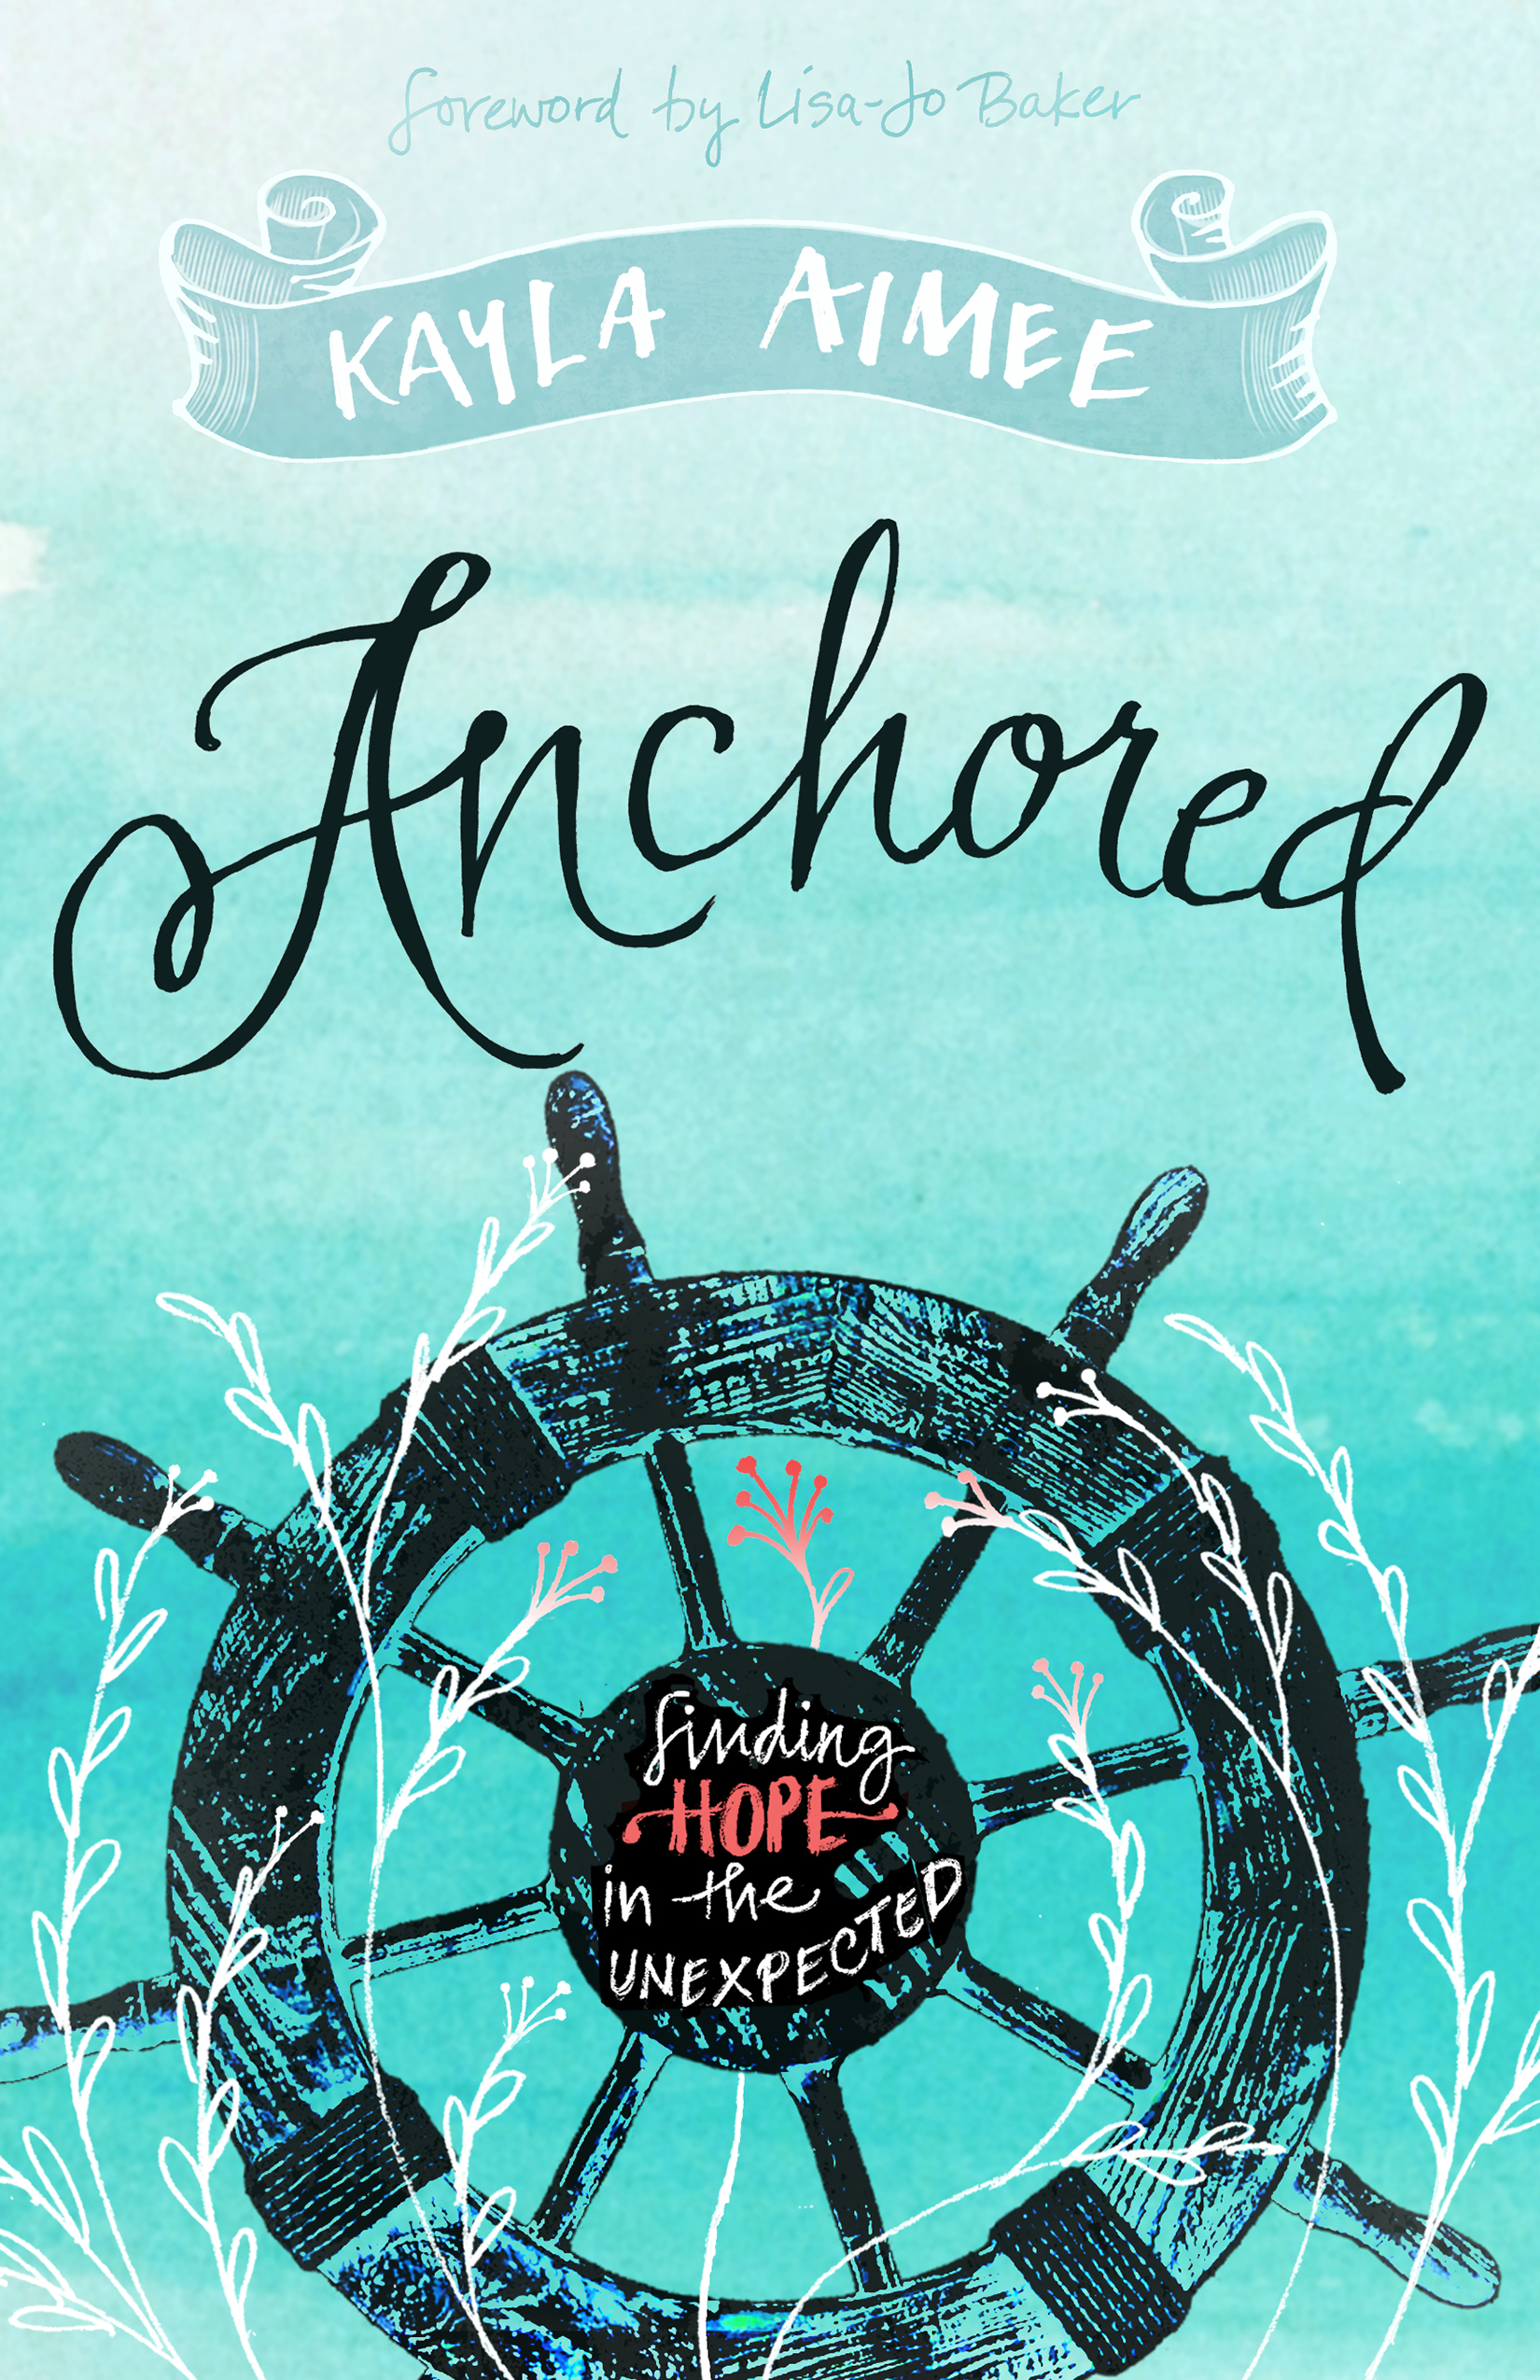 Anchored by Kayla Aimee